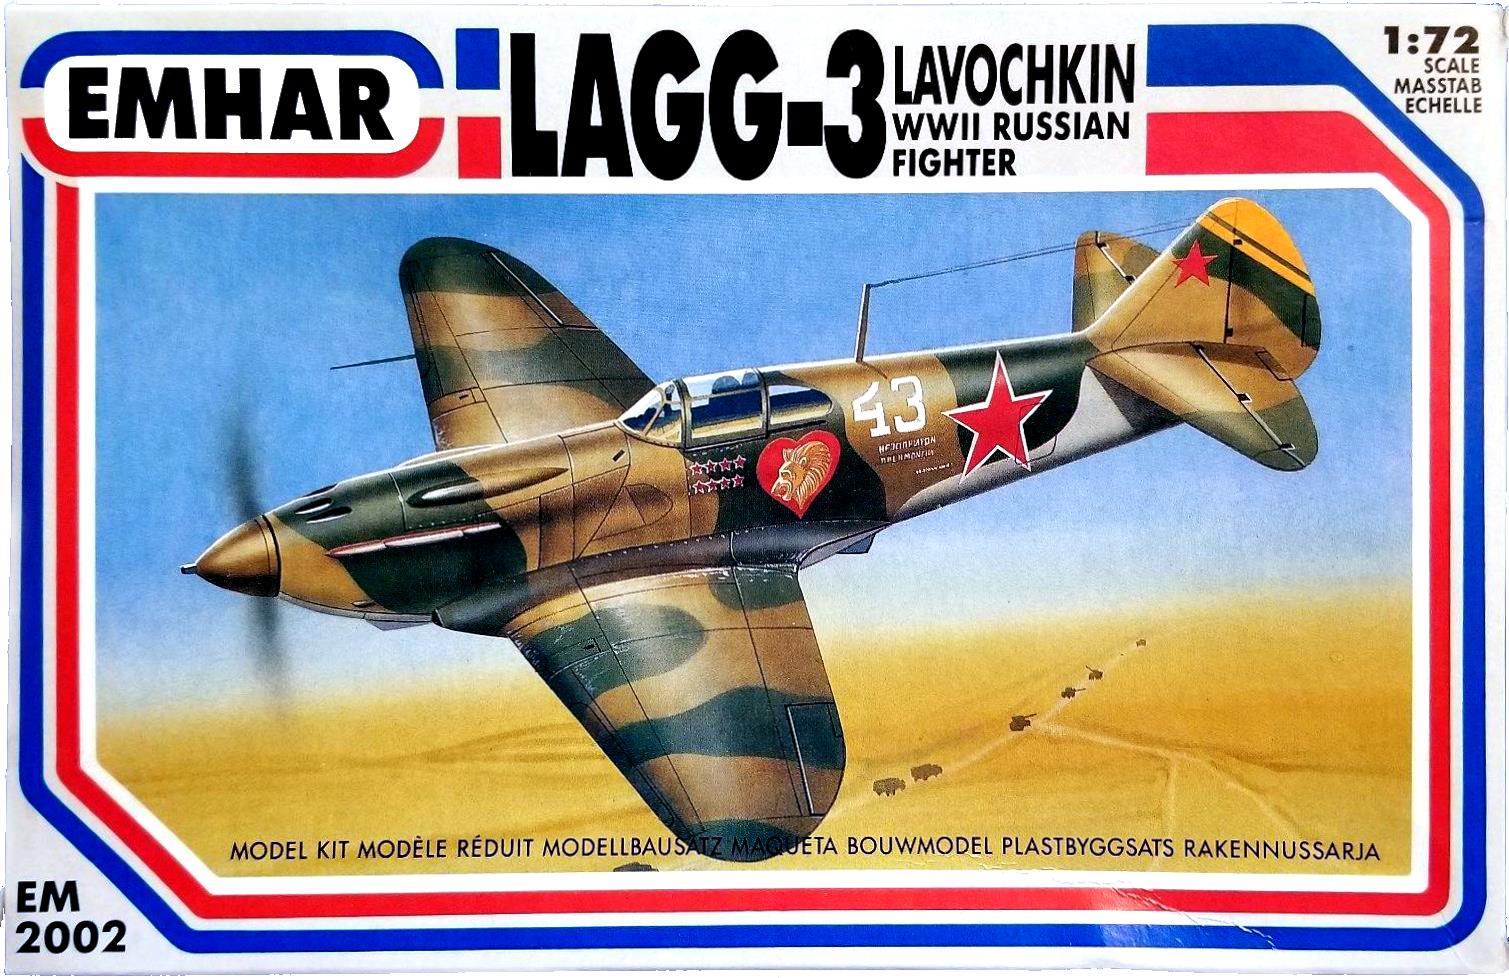 LaGG-3 Lavochkin WWII Russian Fighter 